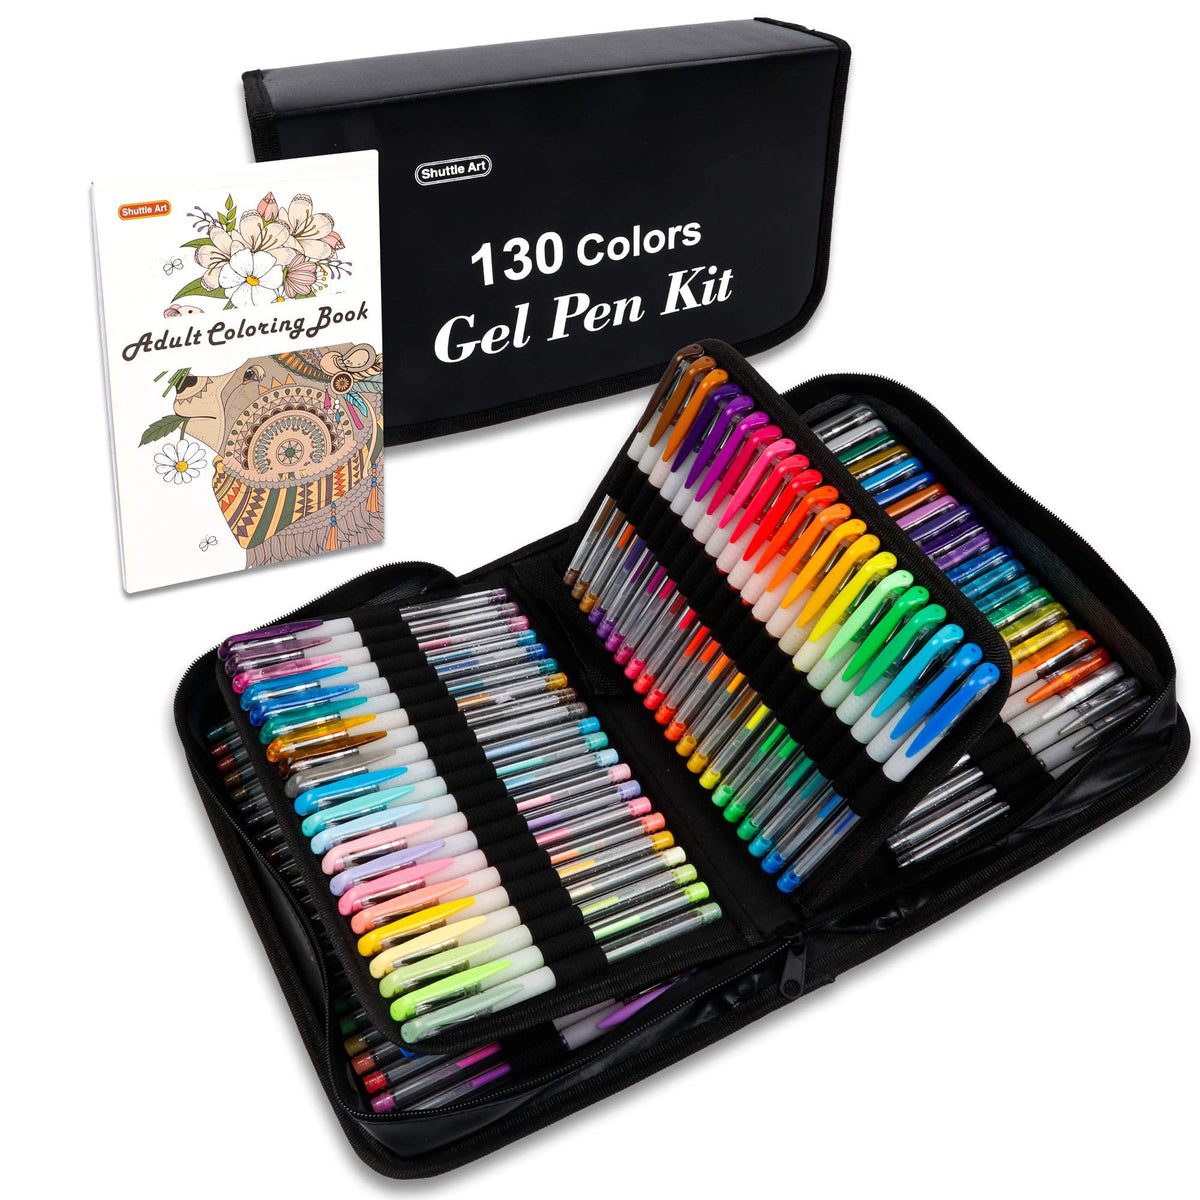 Shuttle Art 80 Colors Glitter Gel Pens 40 Colors Glitter Gel Pen Set with 40 Refills for Adult Coloring Books Craft Doodling